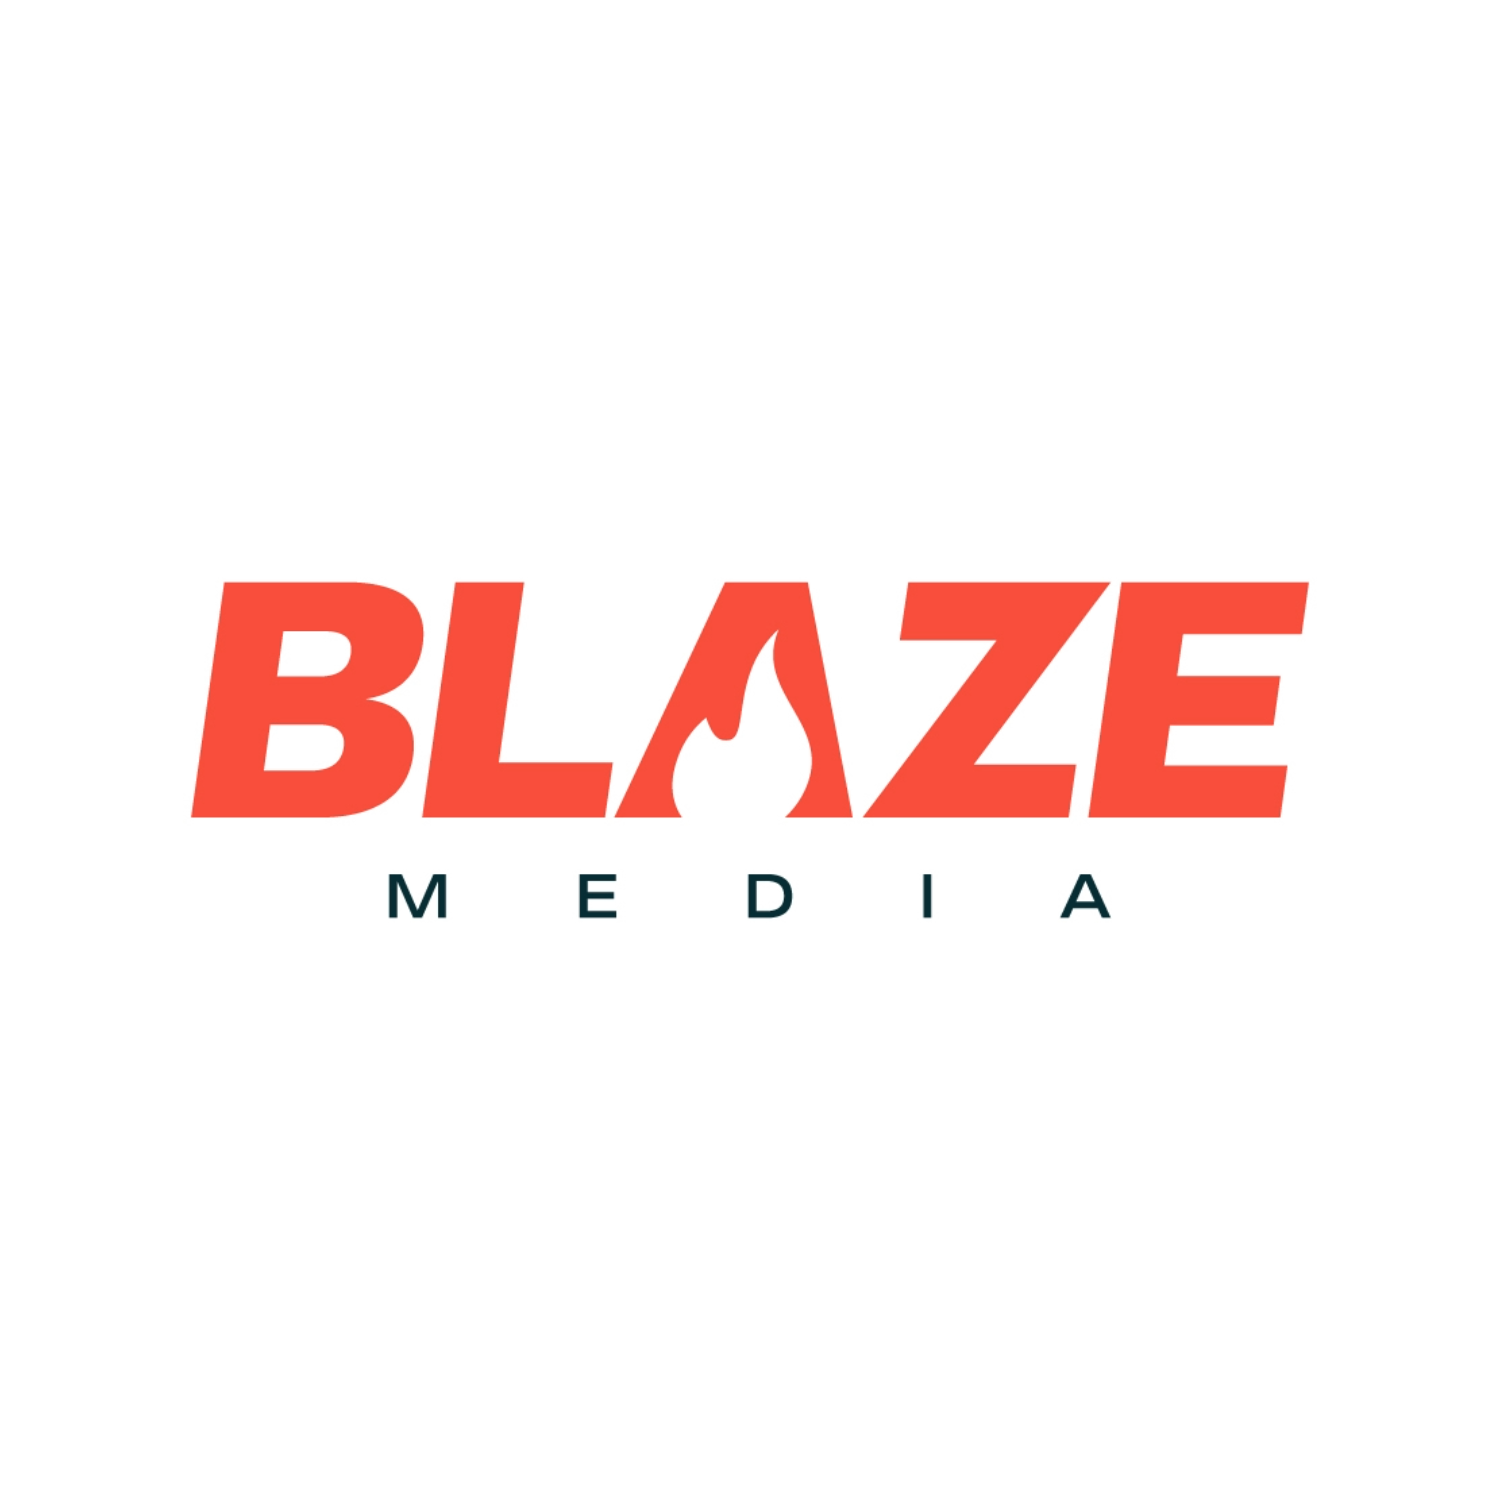 Blaze Media logo